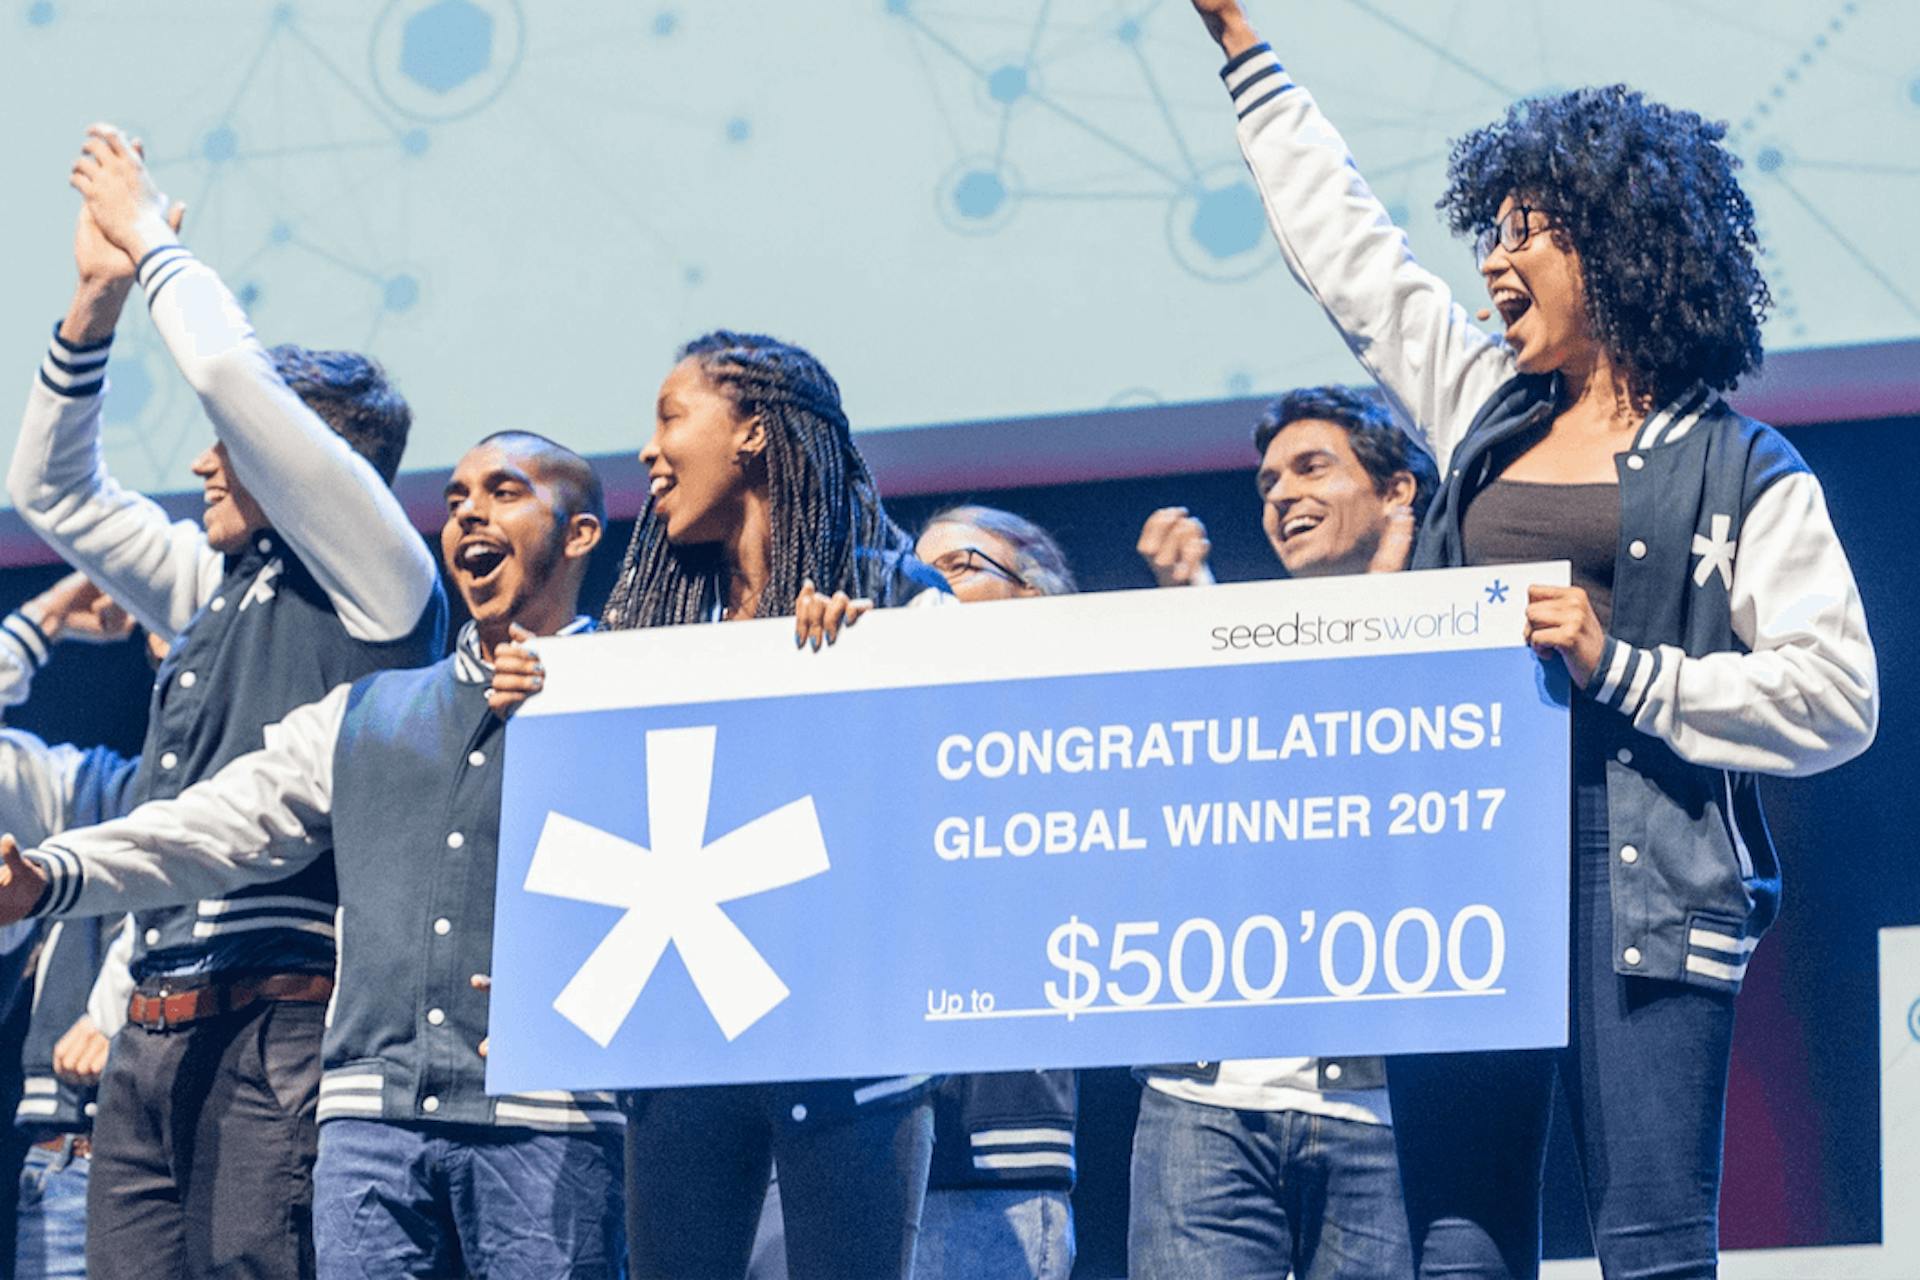 Photo of the Seedstars global winners 2017